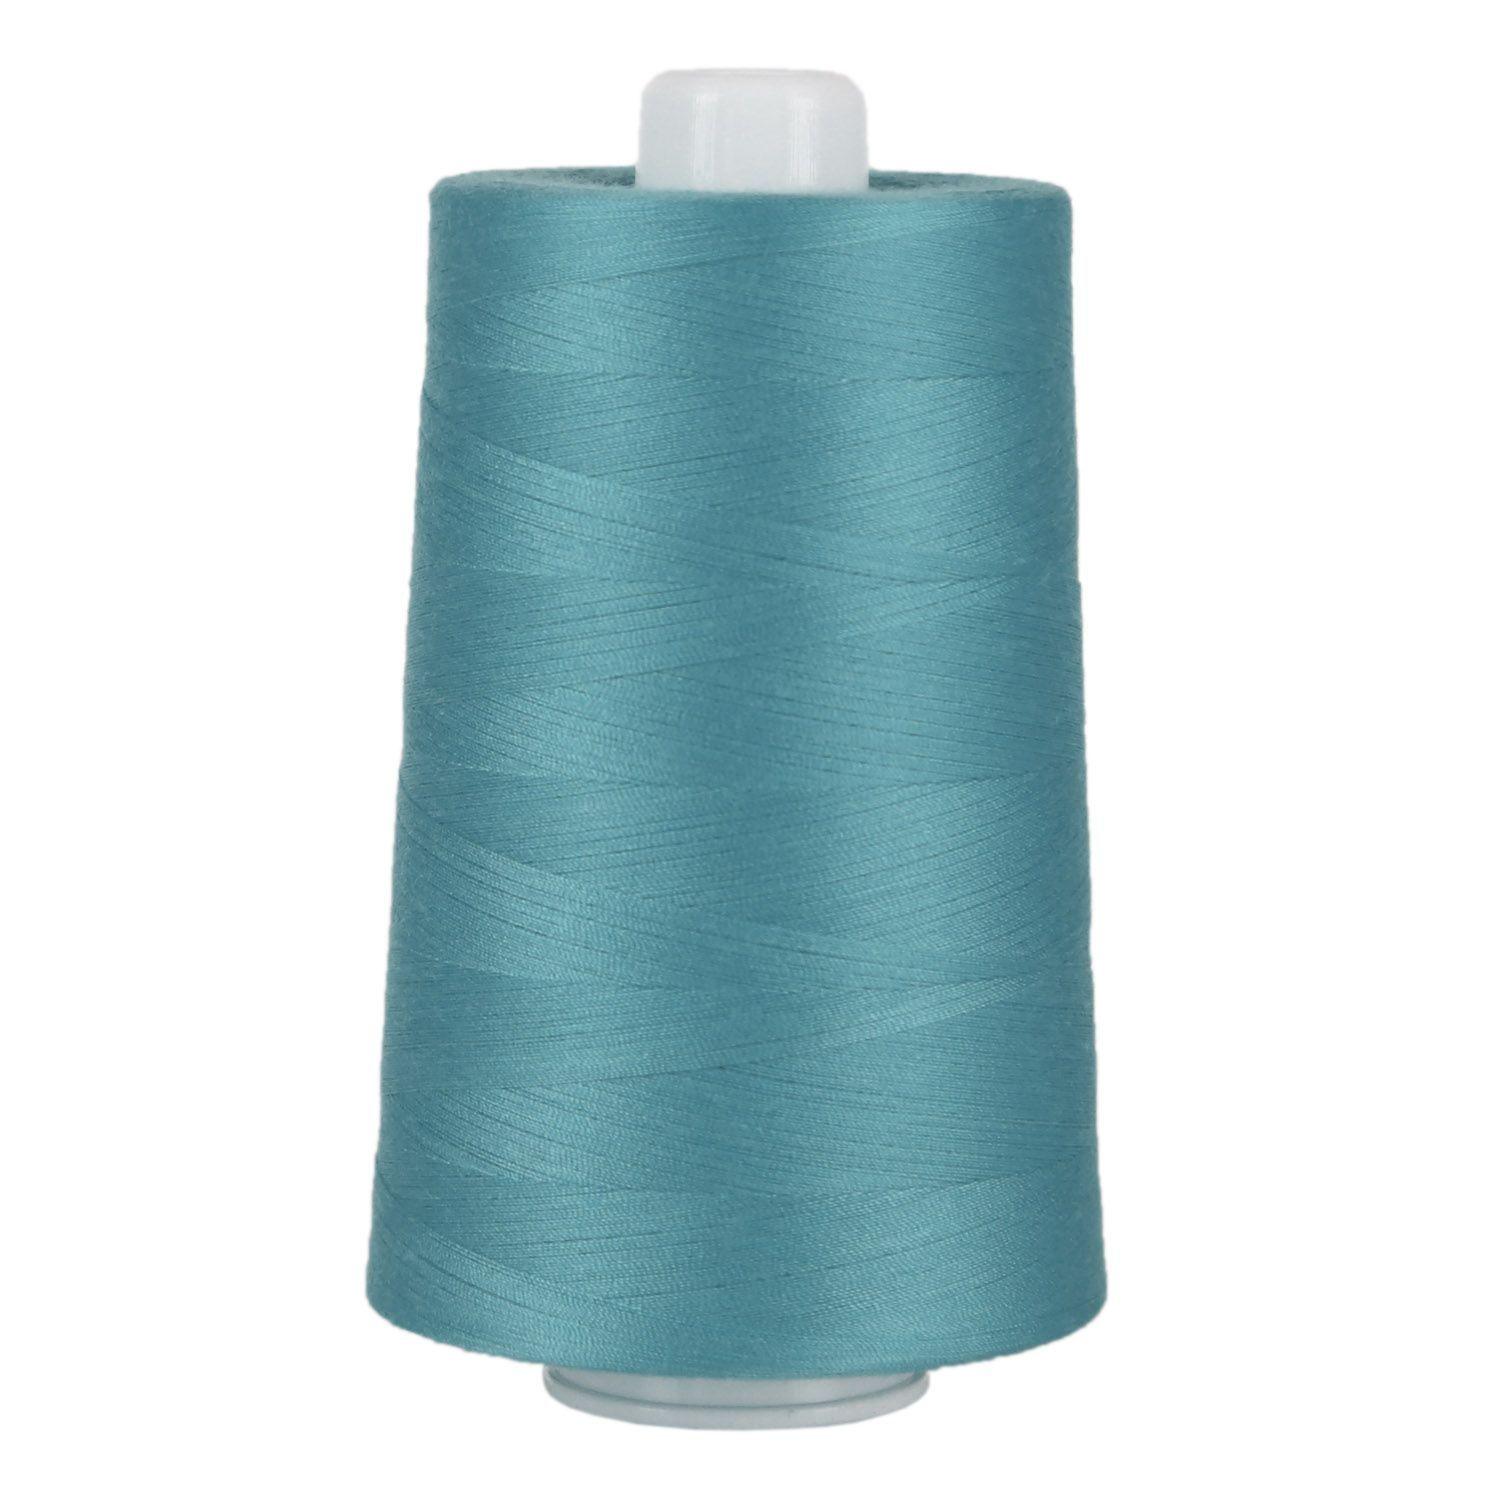 Medium Turquoise, Omni, 6000YD - Kawartha Quilting and Sewing LTD.